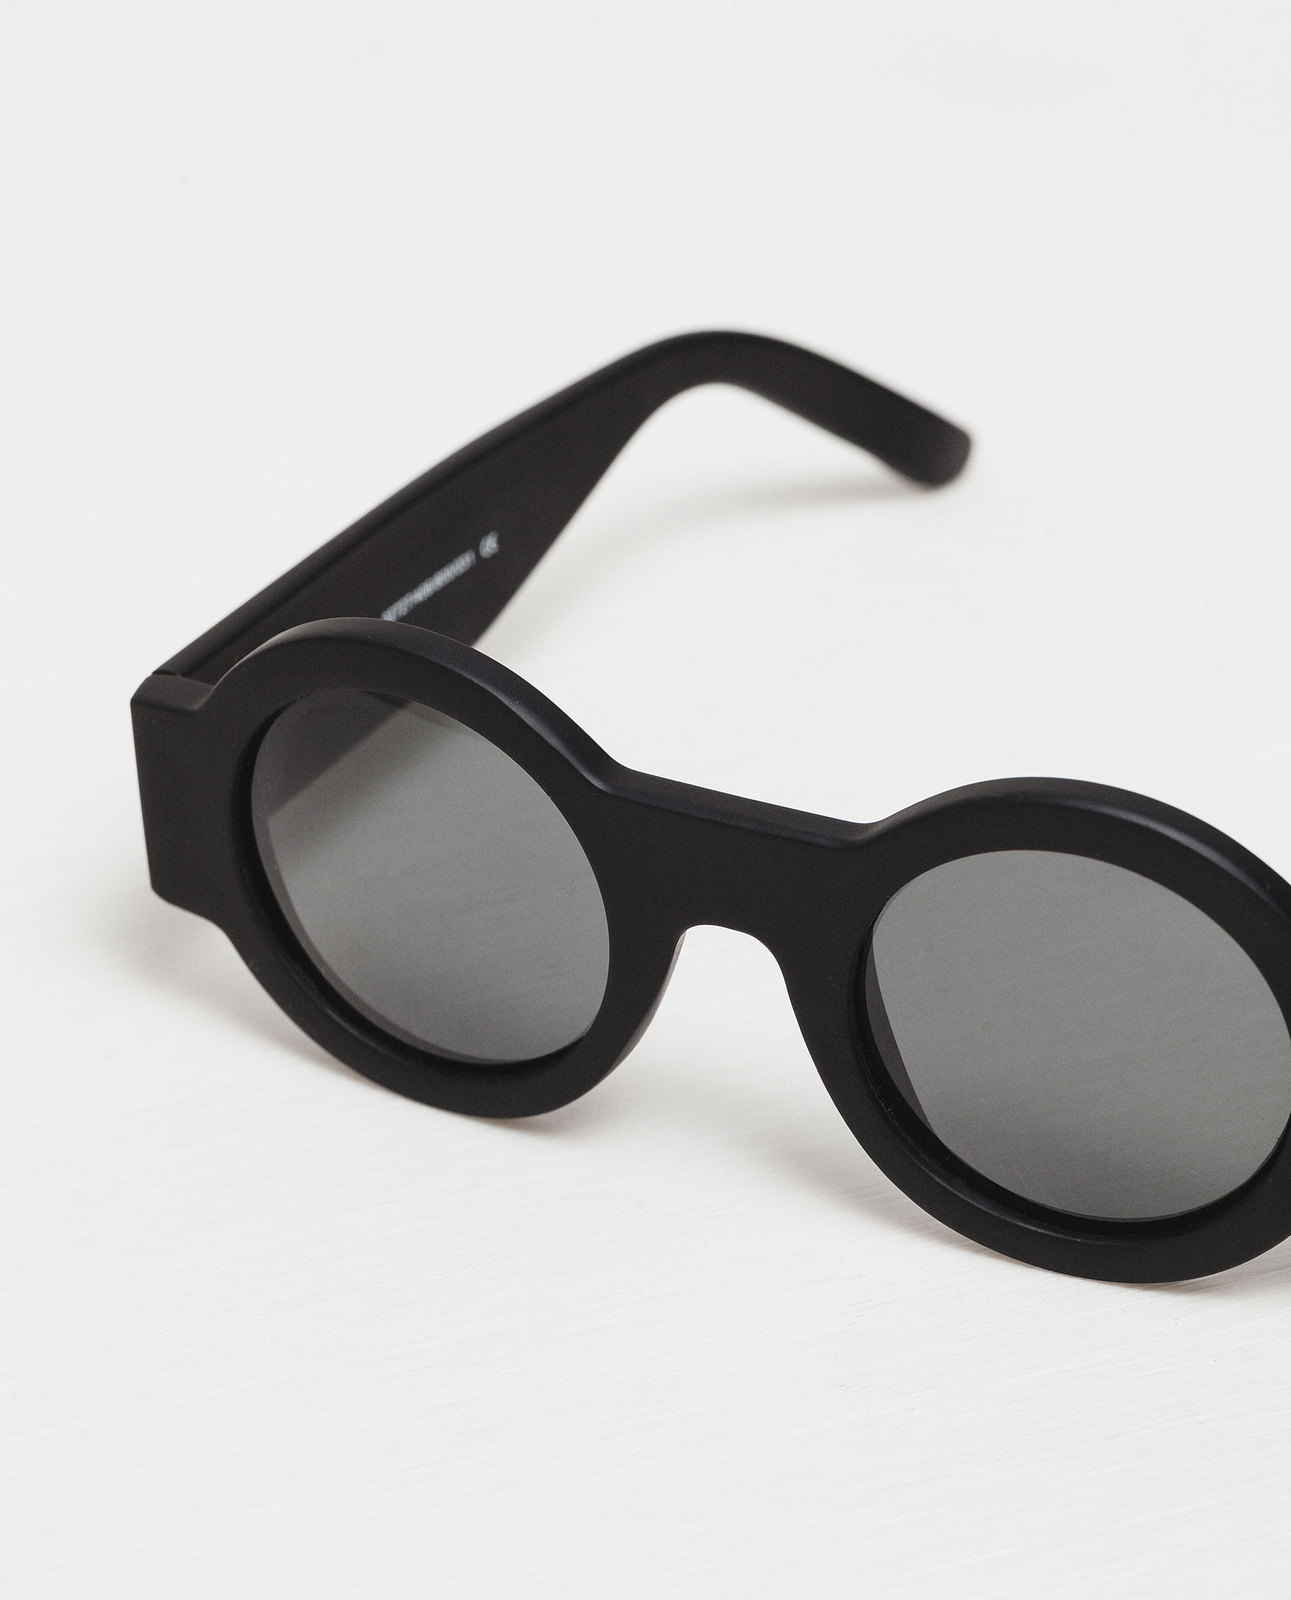 Zara fekete kerek napszemüveg 2015 fotója